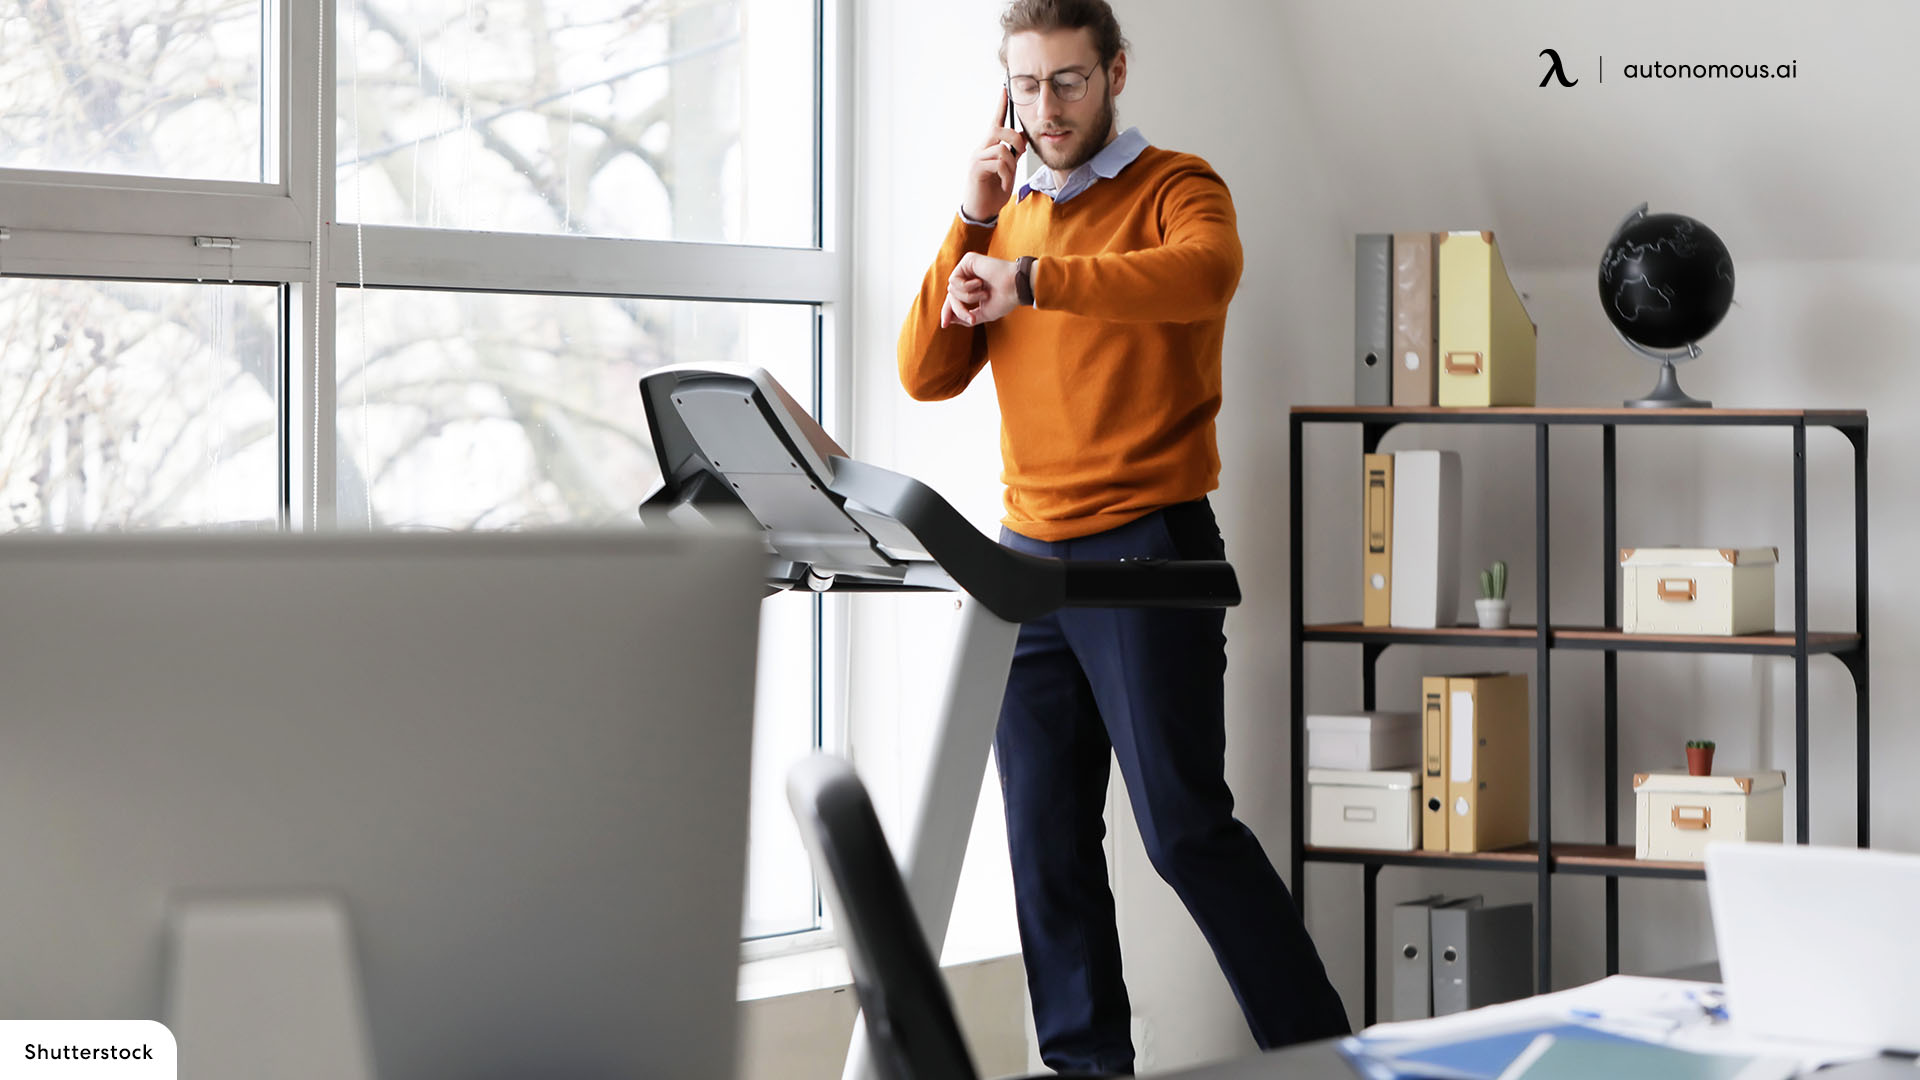 15 Best Under Desk Treadmills in 2022 to Work Out at Work